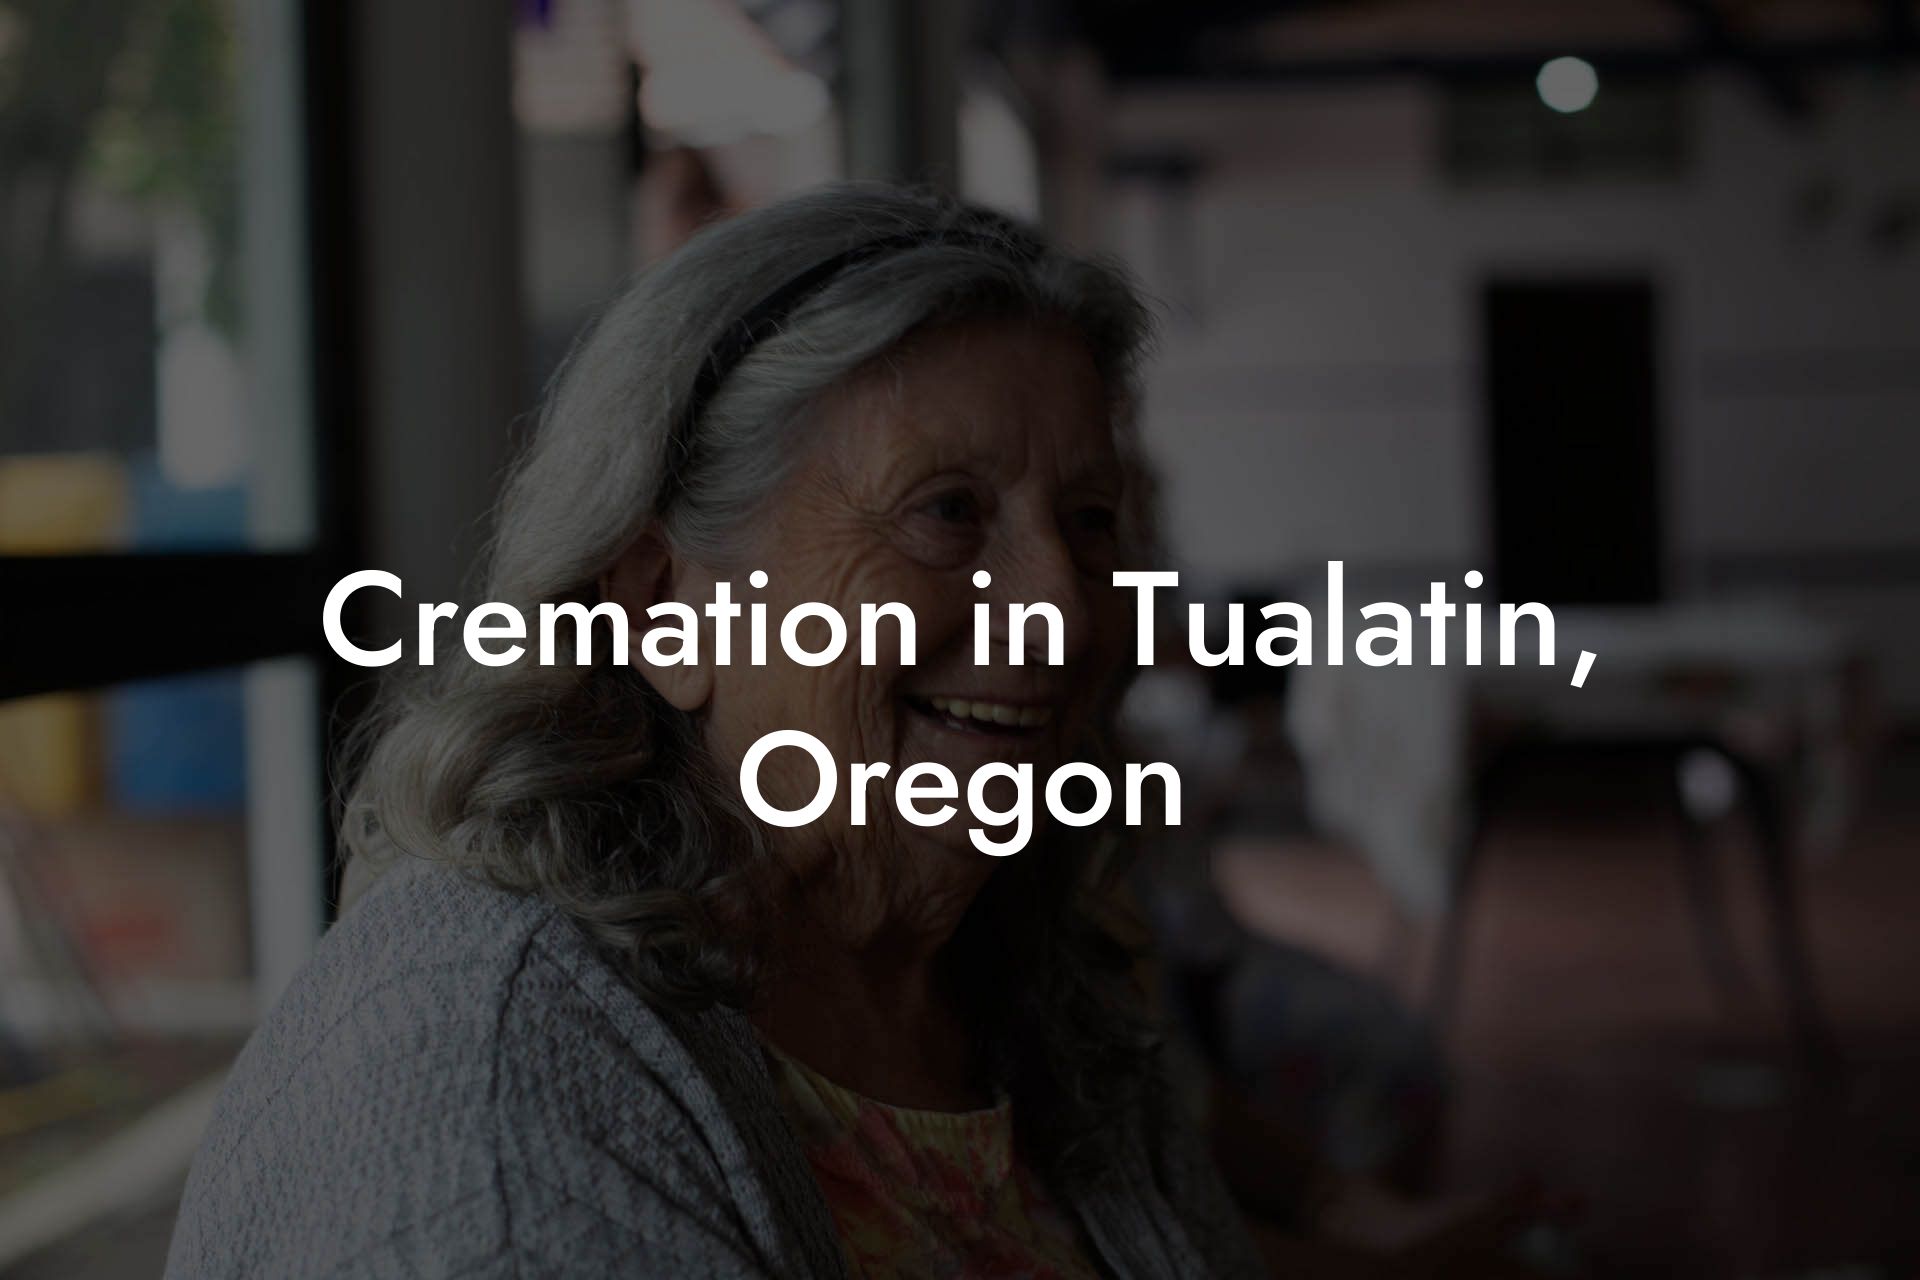 Cremation in Tualatin, Oregon